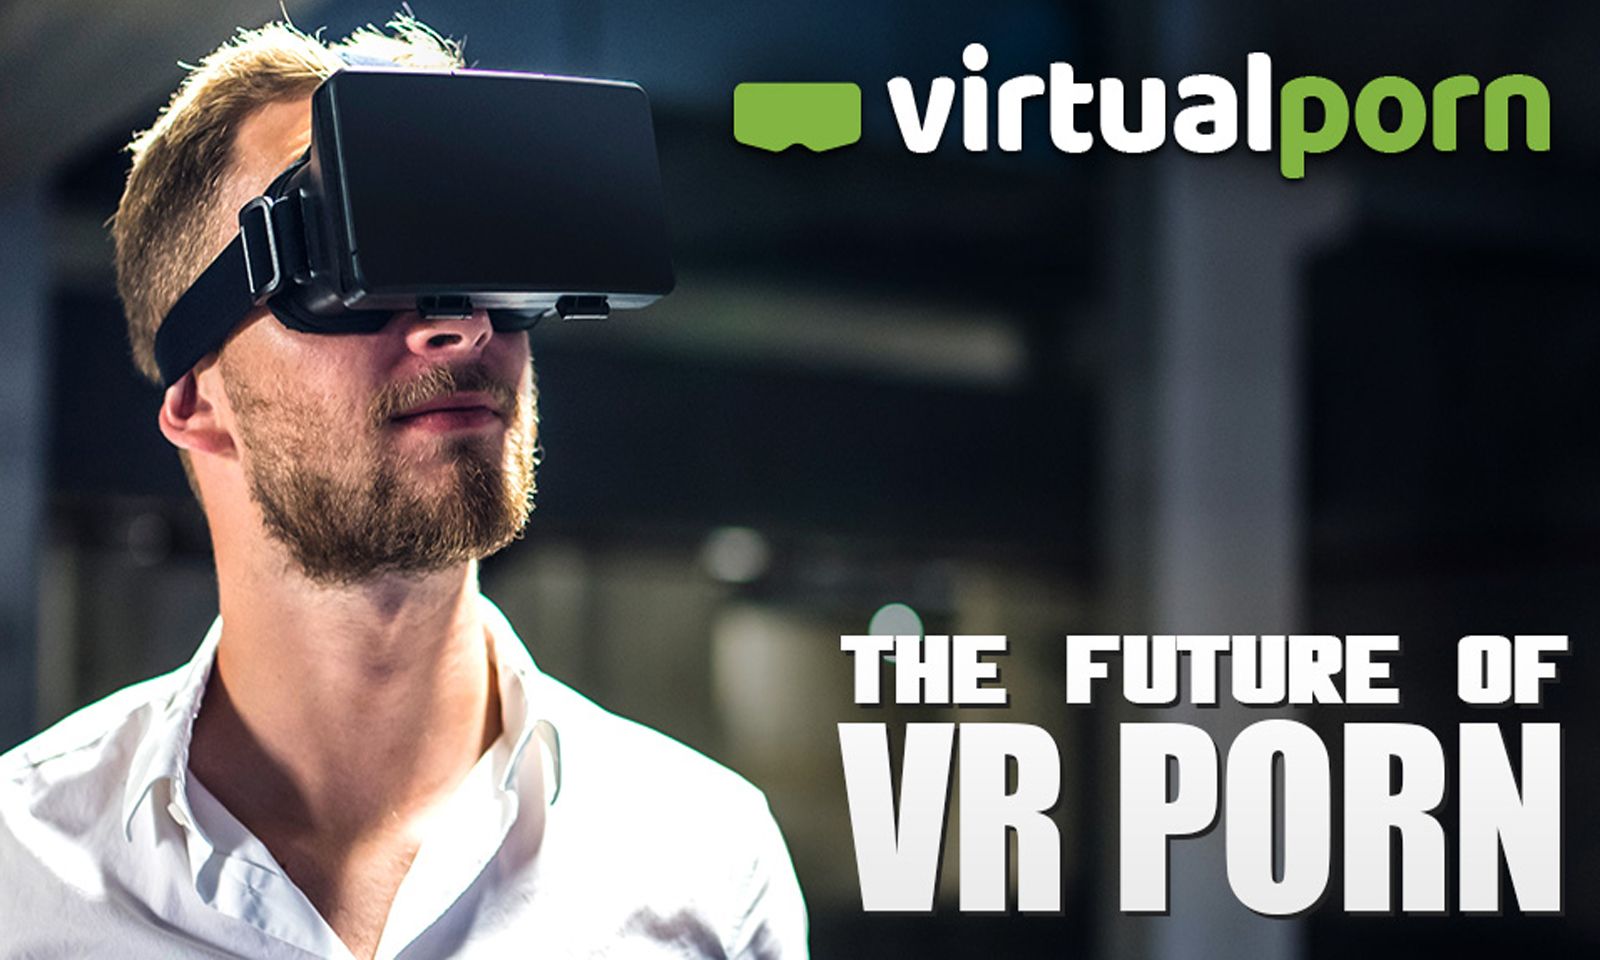 The Future of VR Porn According to Virtual.Porn